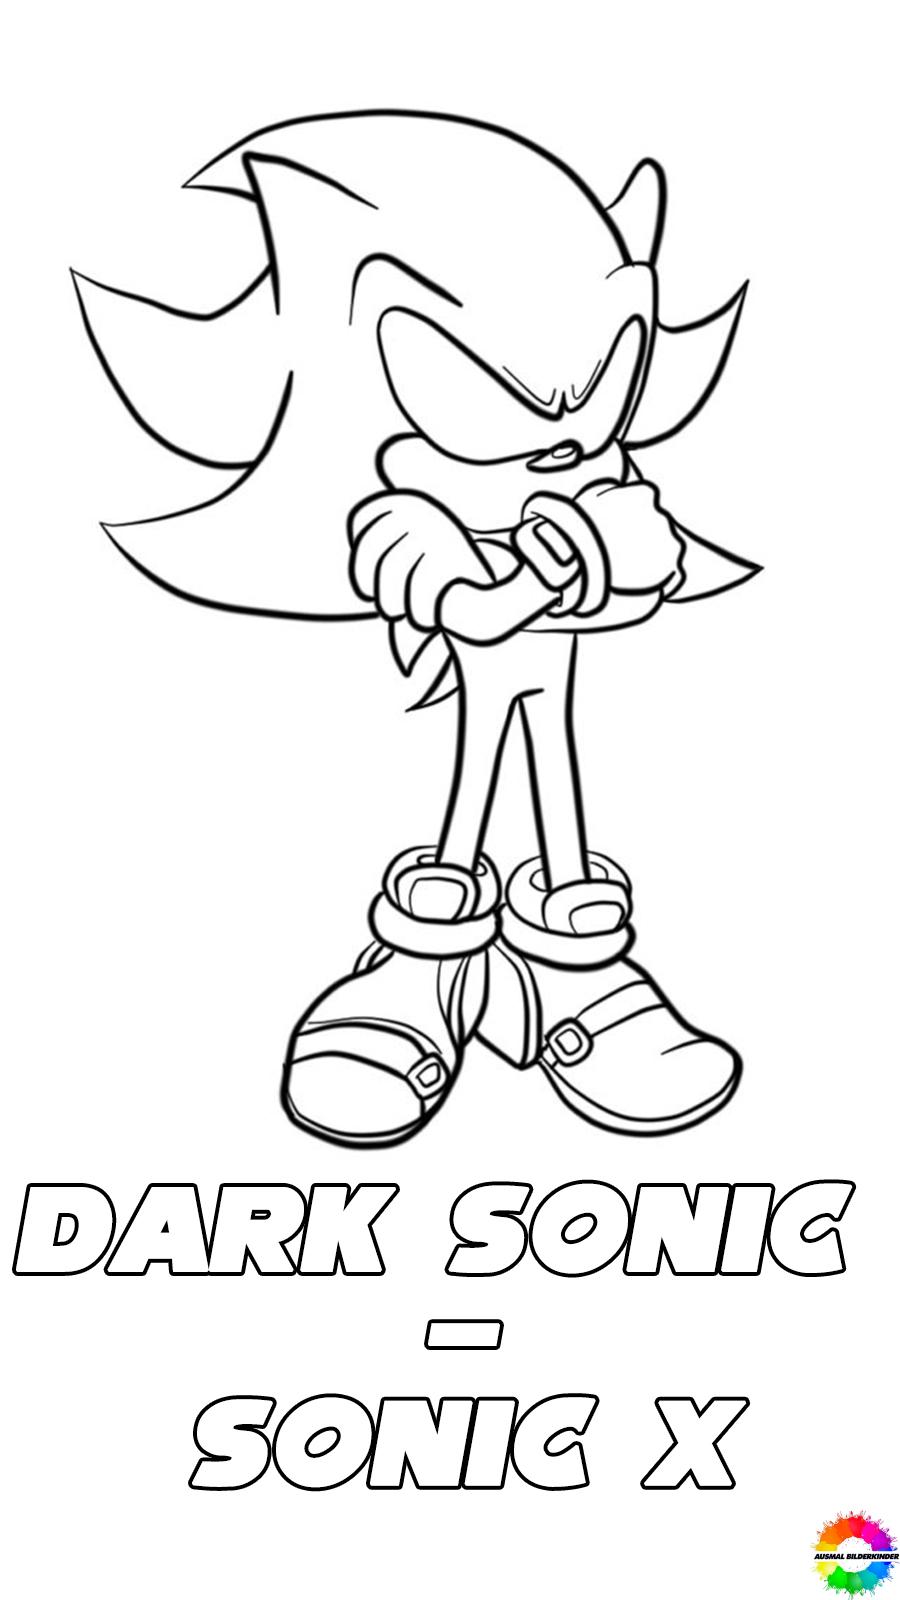 Dark Sonic 3